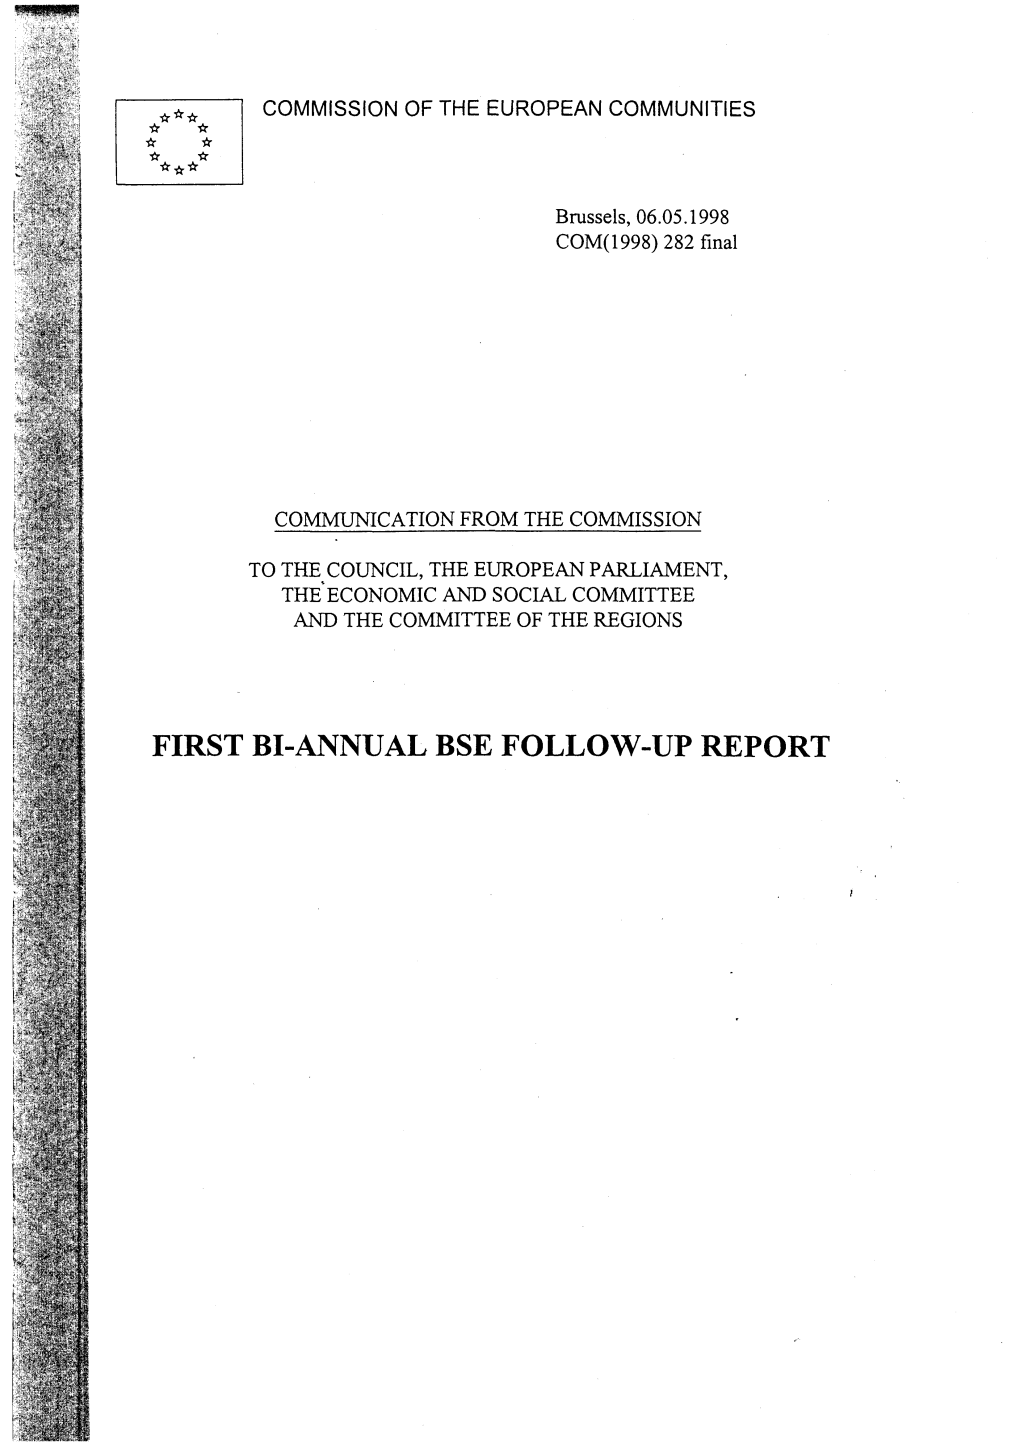 First Bi-Annual Bse Follow-Up Report